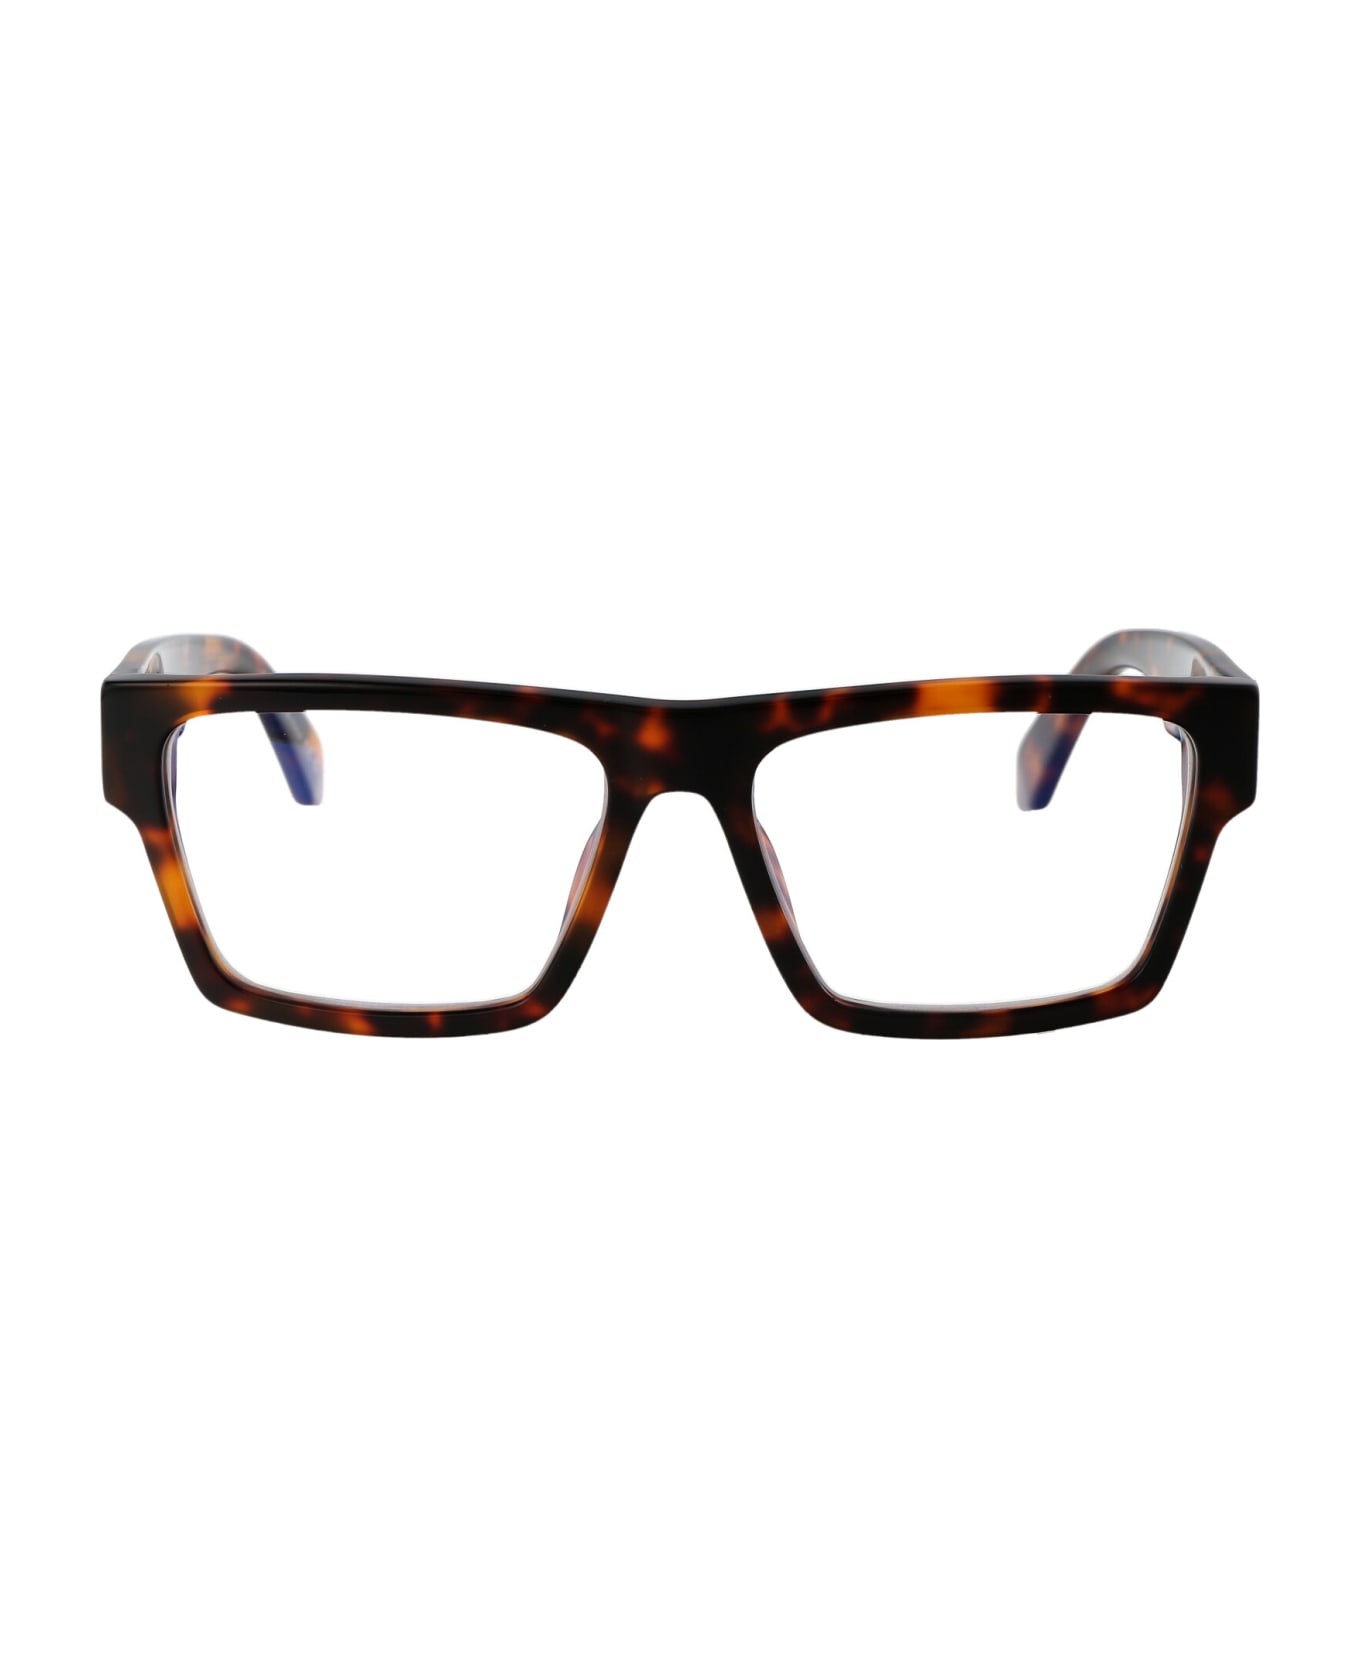 Off-White Optical Style 46 Glasses - 6000 HAVANA